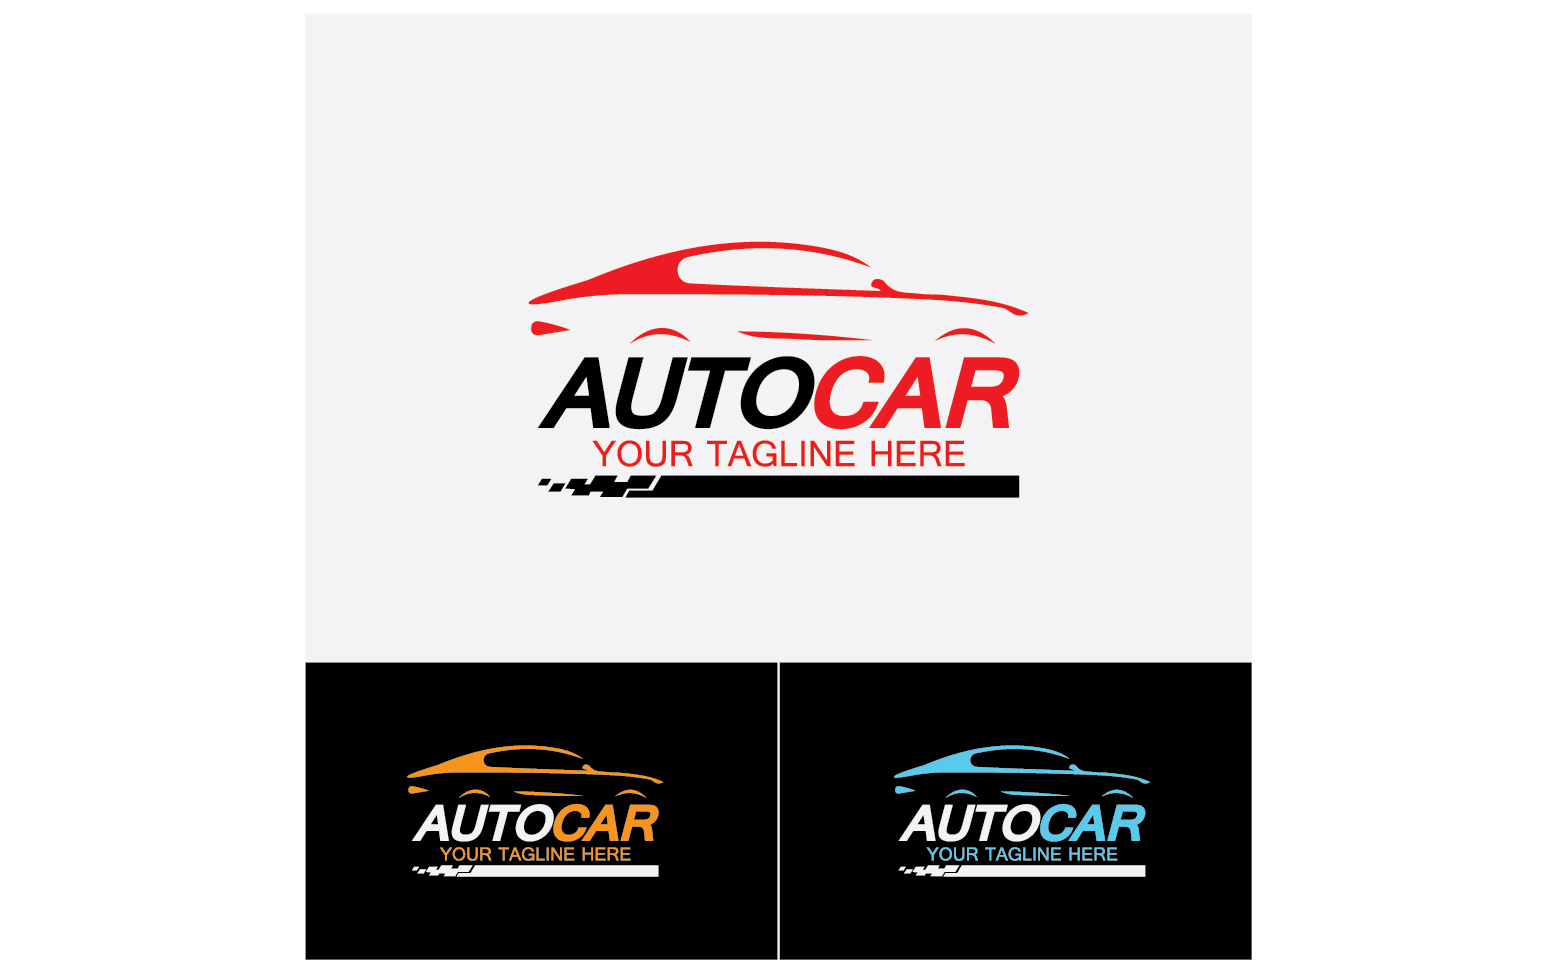 Cars dealer, automotive, autocar logo design inspiration. v43